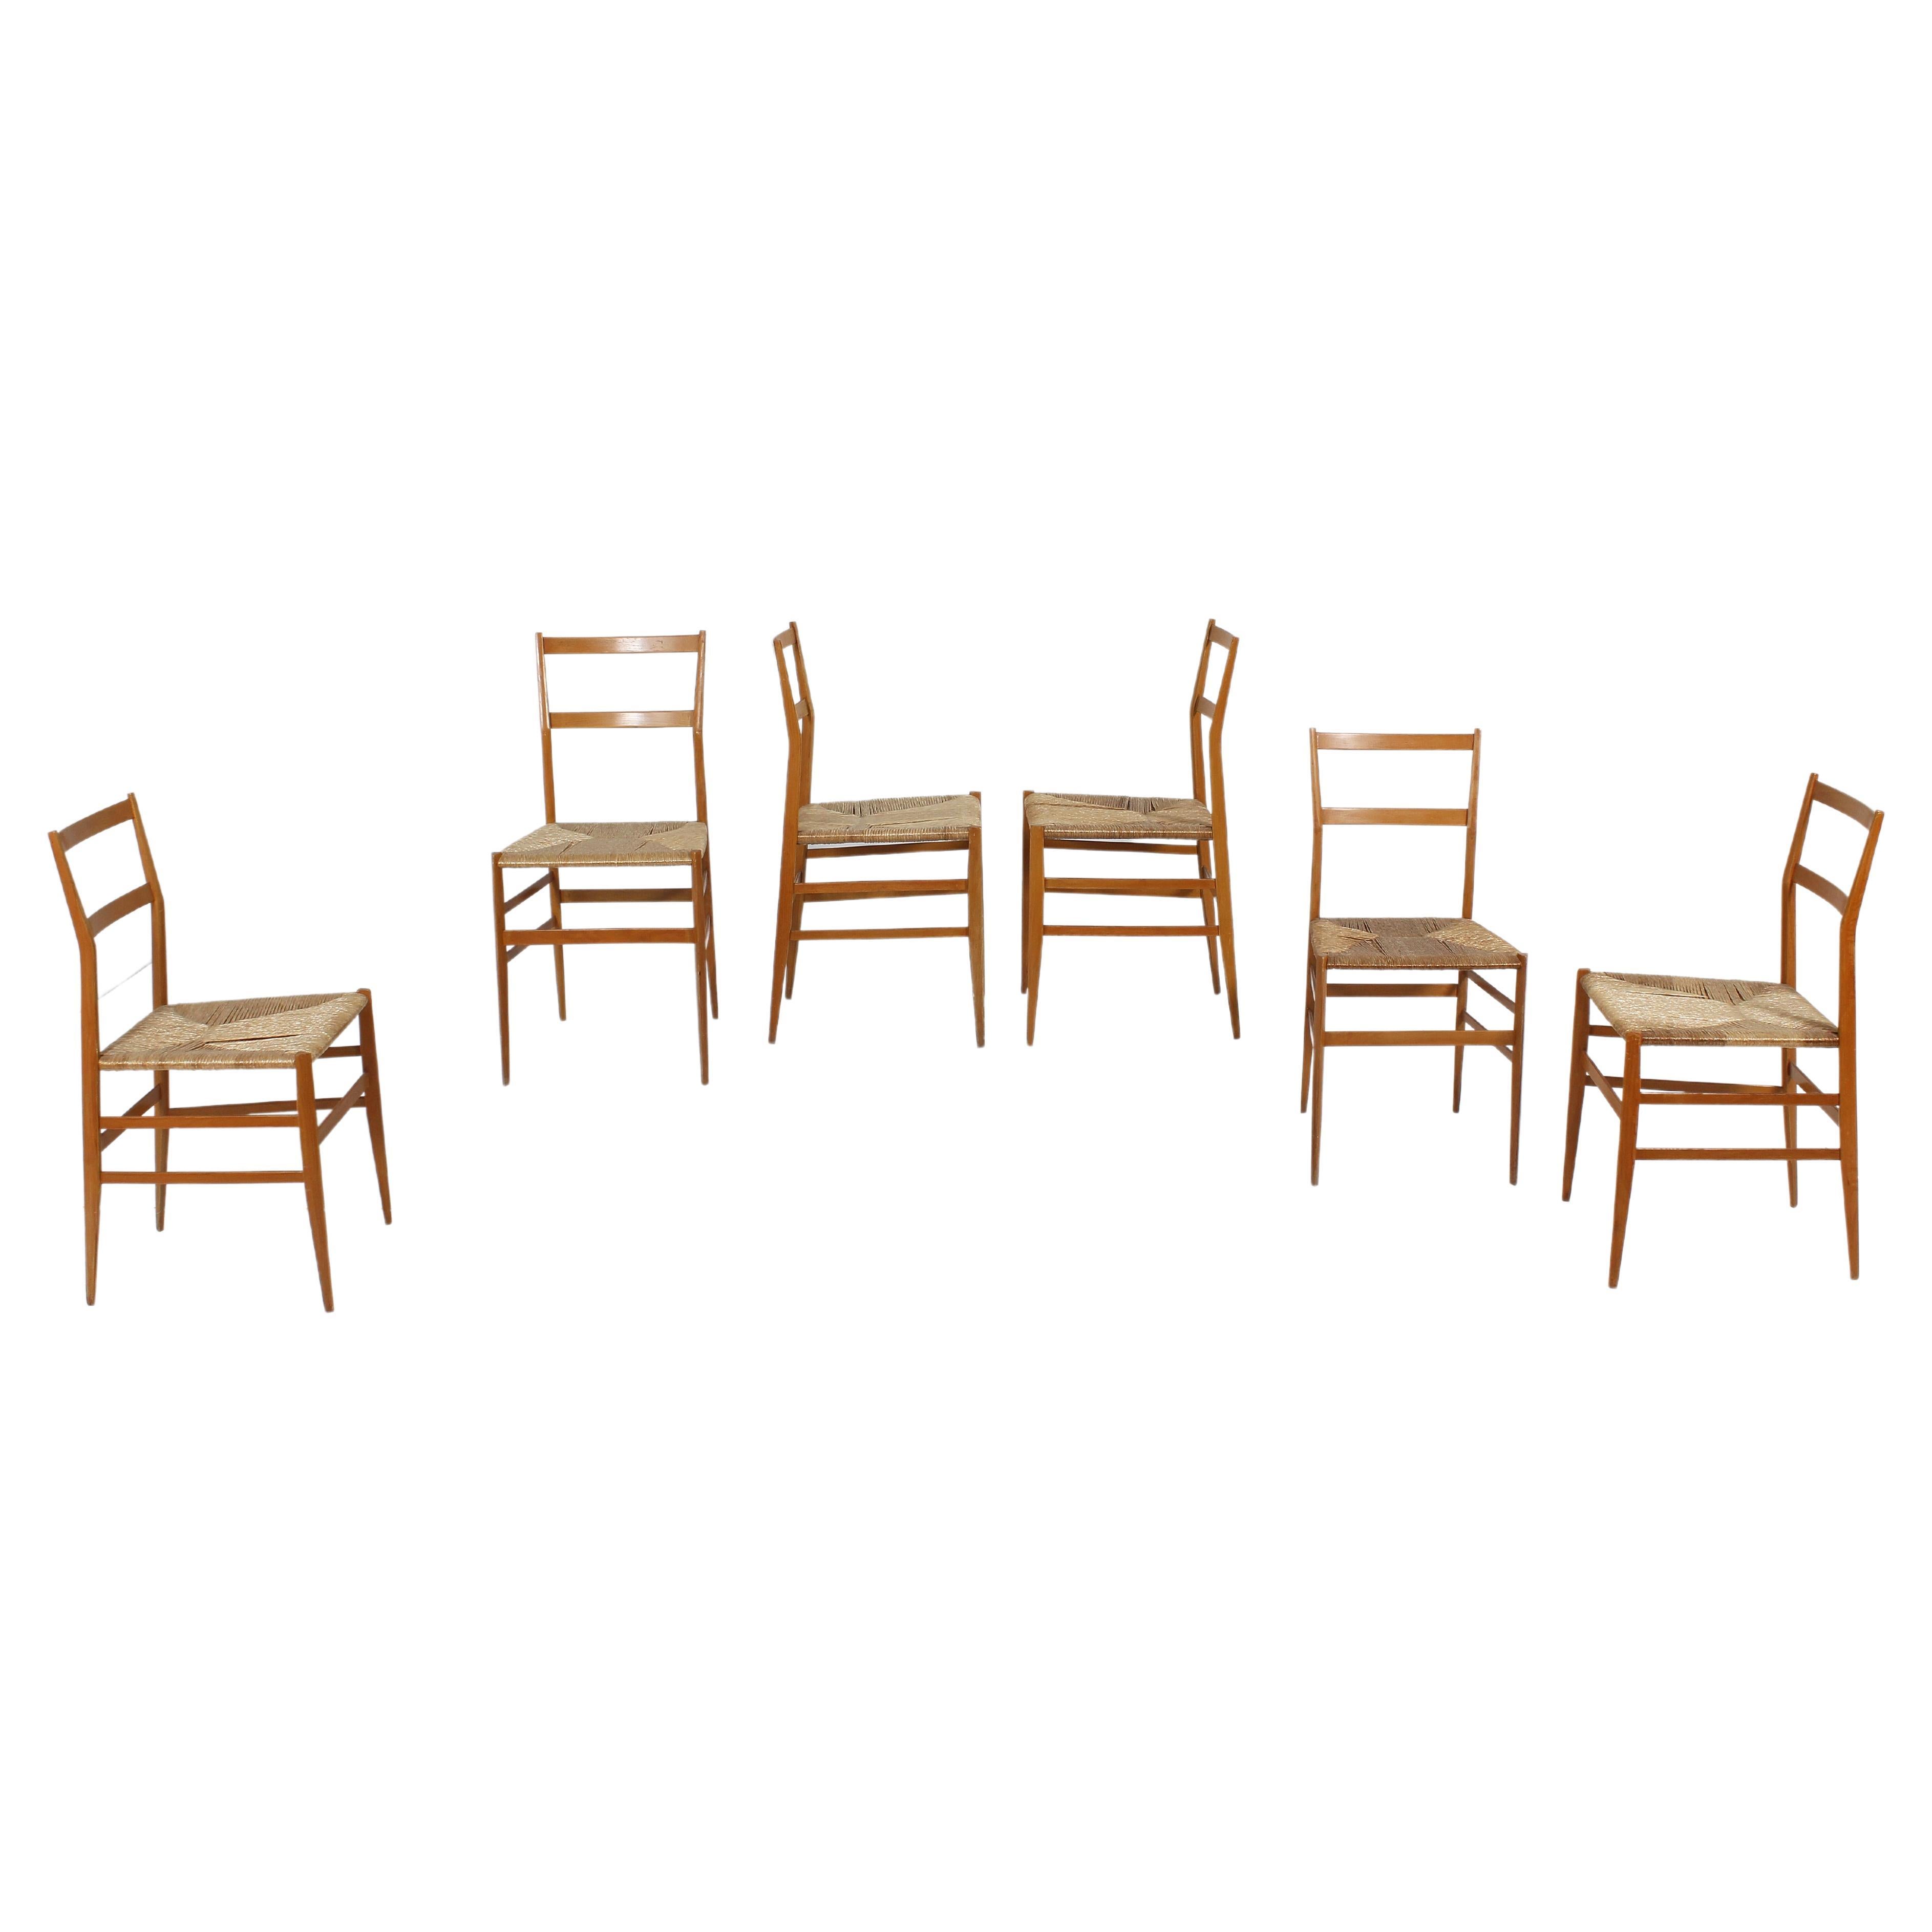 Rare and prestigious set of six chairs model 